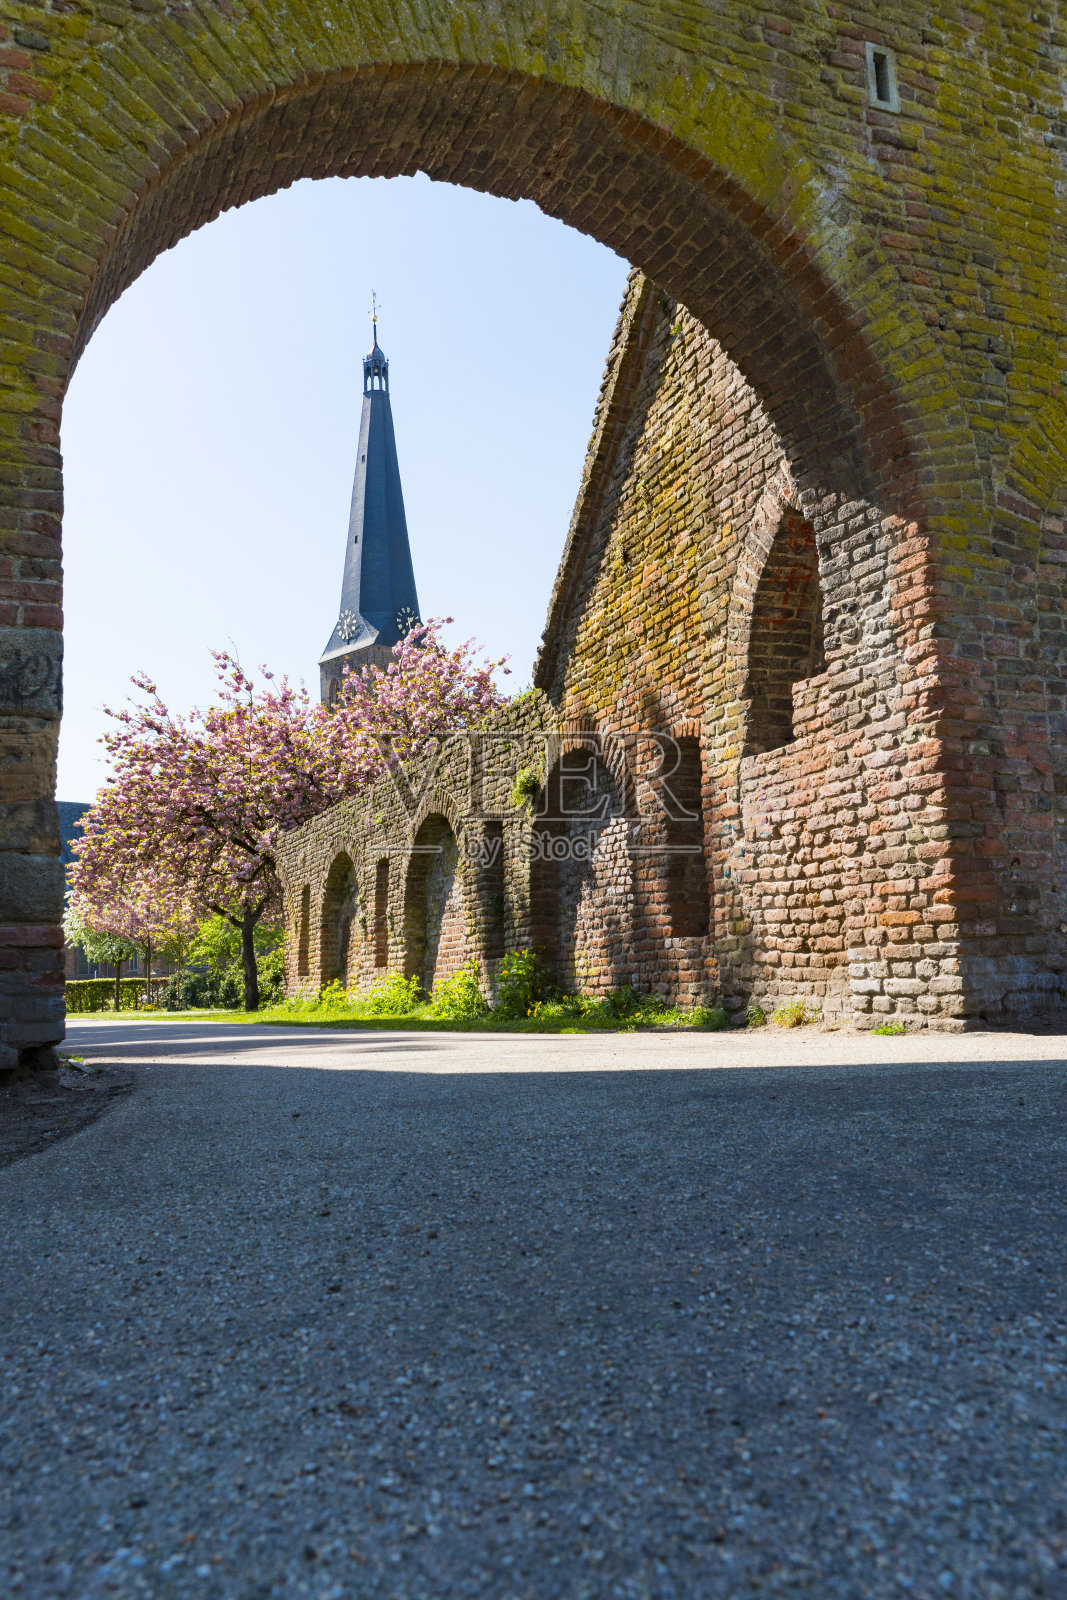 Niewstadsekerk, Johannes de Doper教堂，废墟，在荷兰Zutphen被称为spanjaardsport或spaese port的城门，照片摄影图片